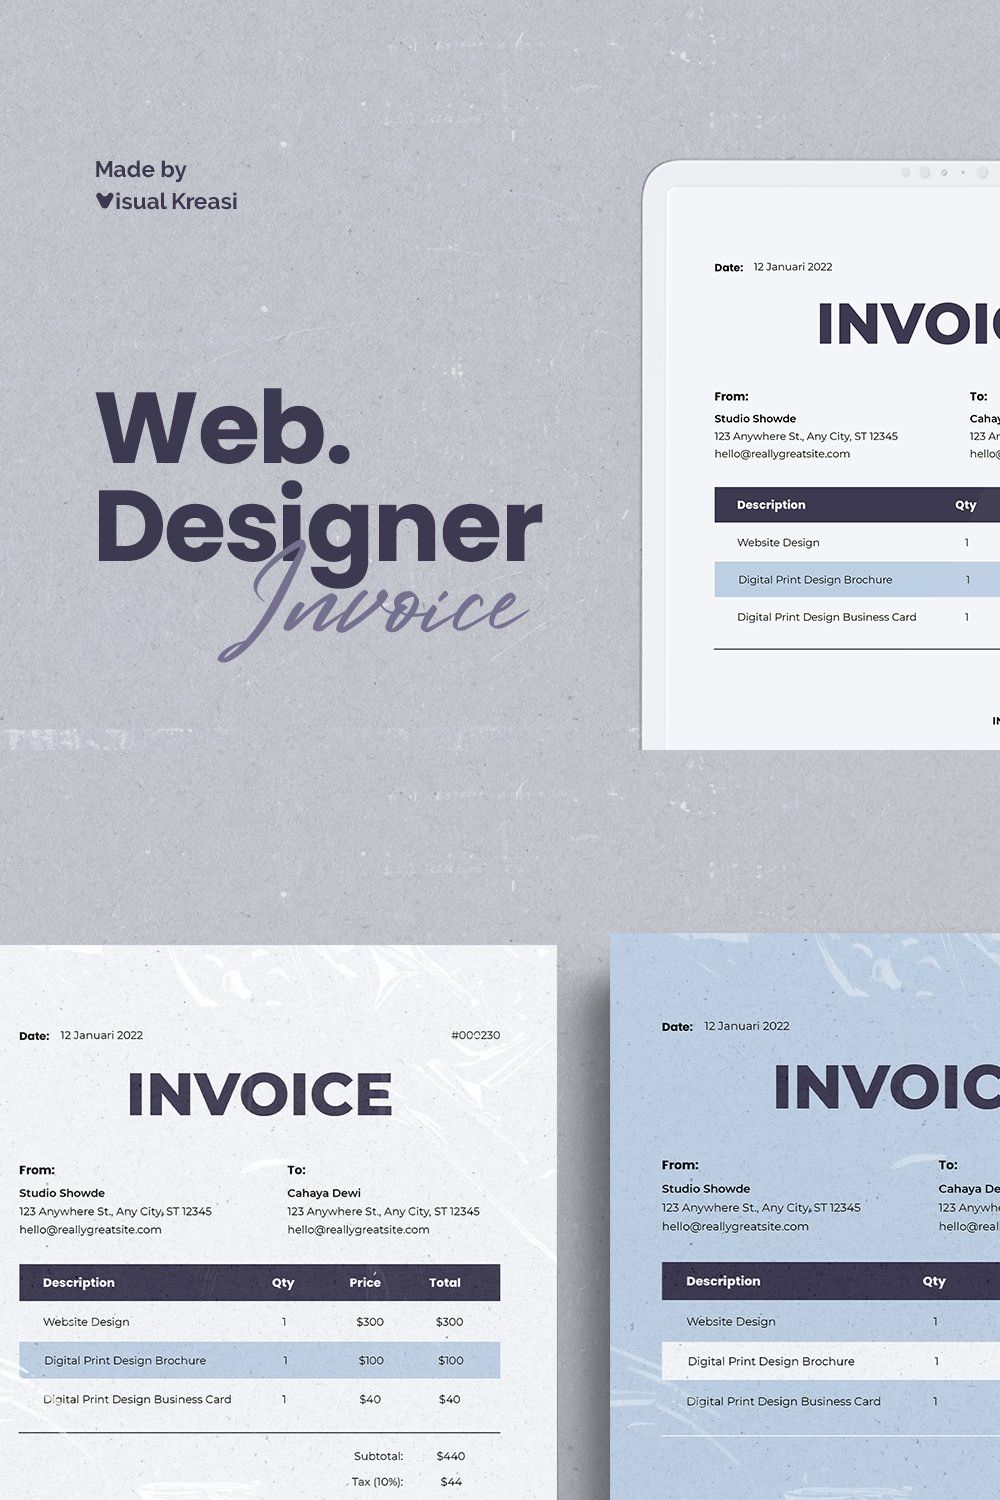 Web Designer Invoice Template pinterest preview image.